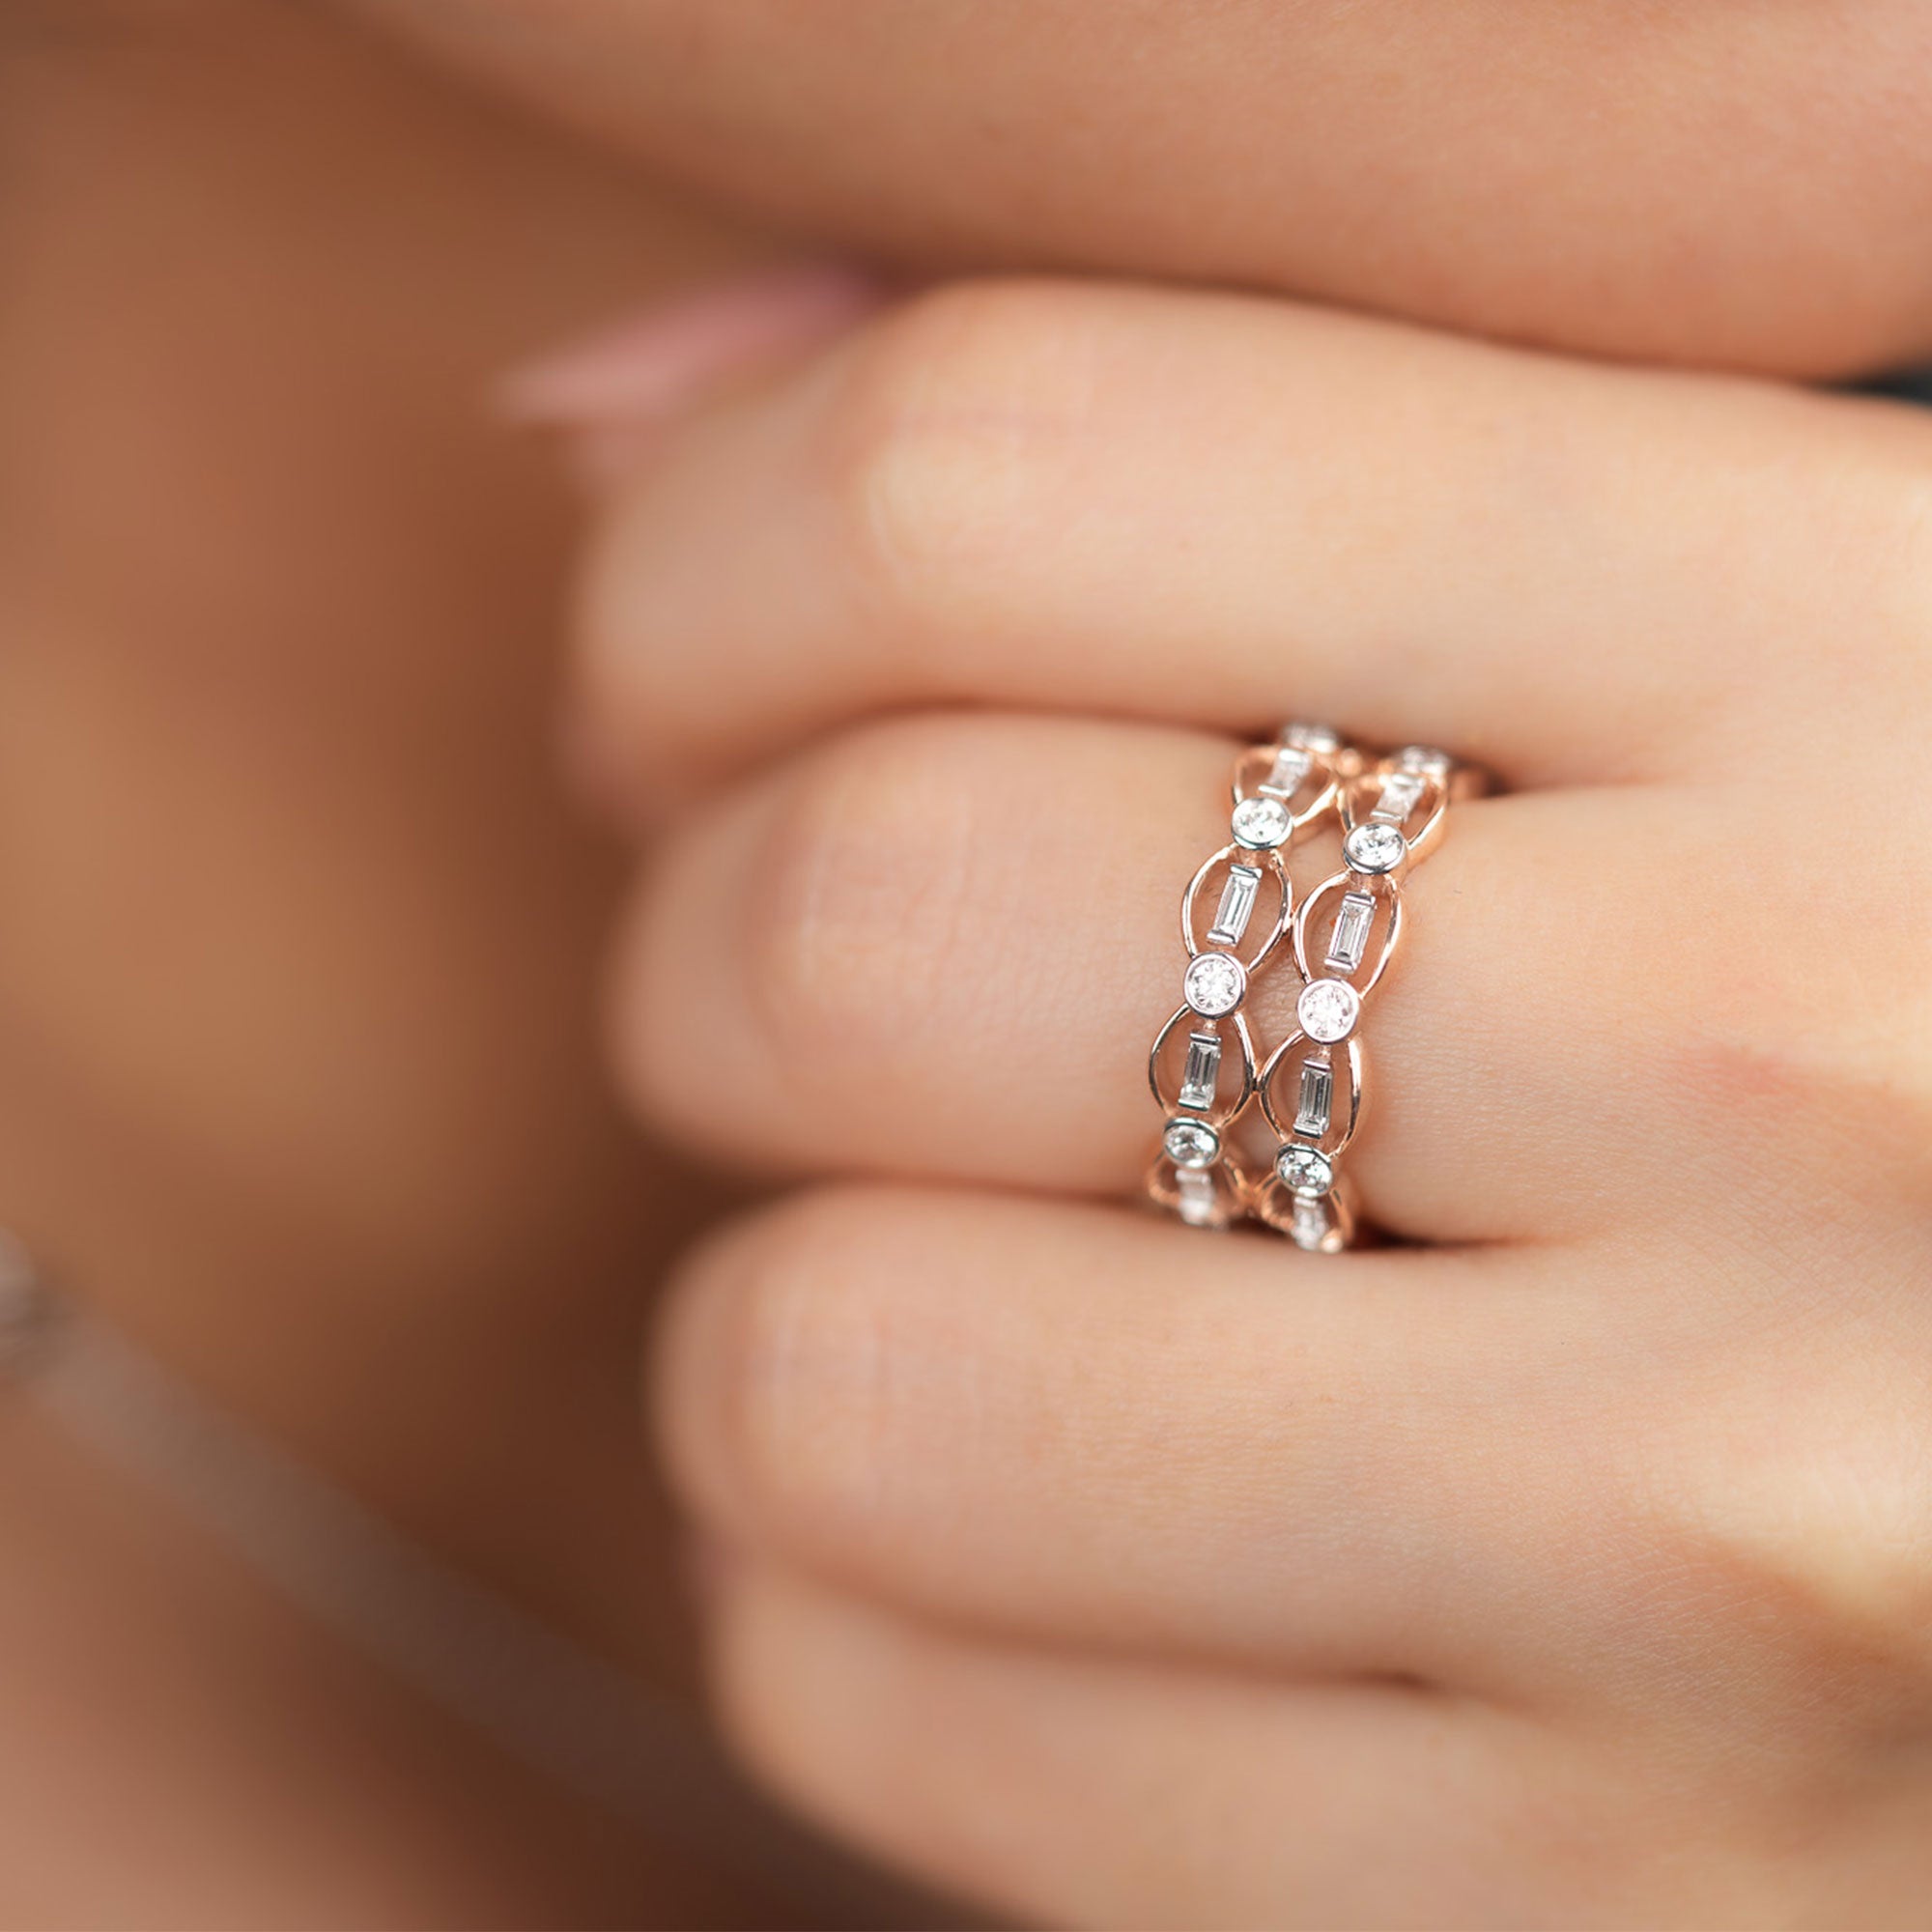 4.18Ct Baguette Cut Diamond Eternity Ring in Rose Gold For Women - Blu Diamonds